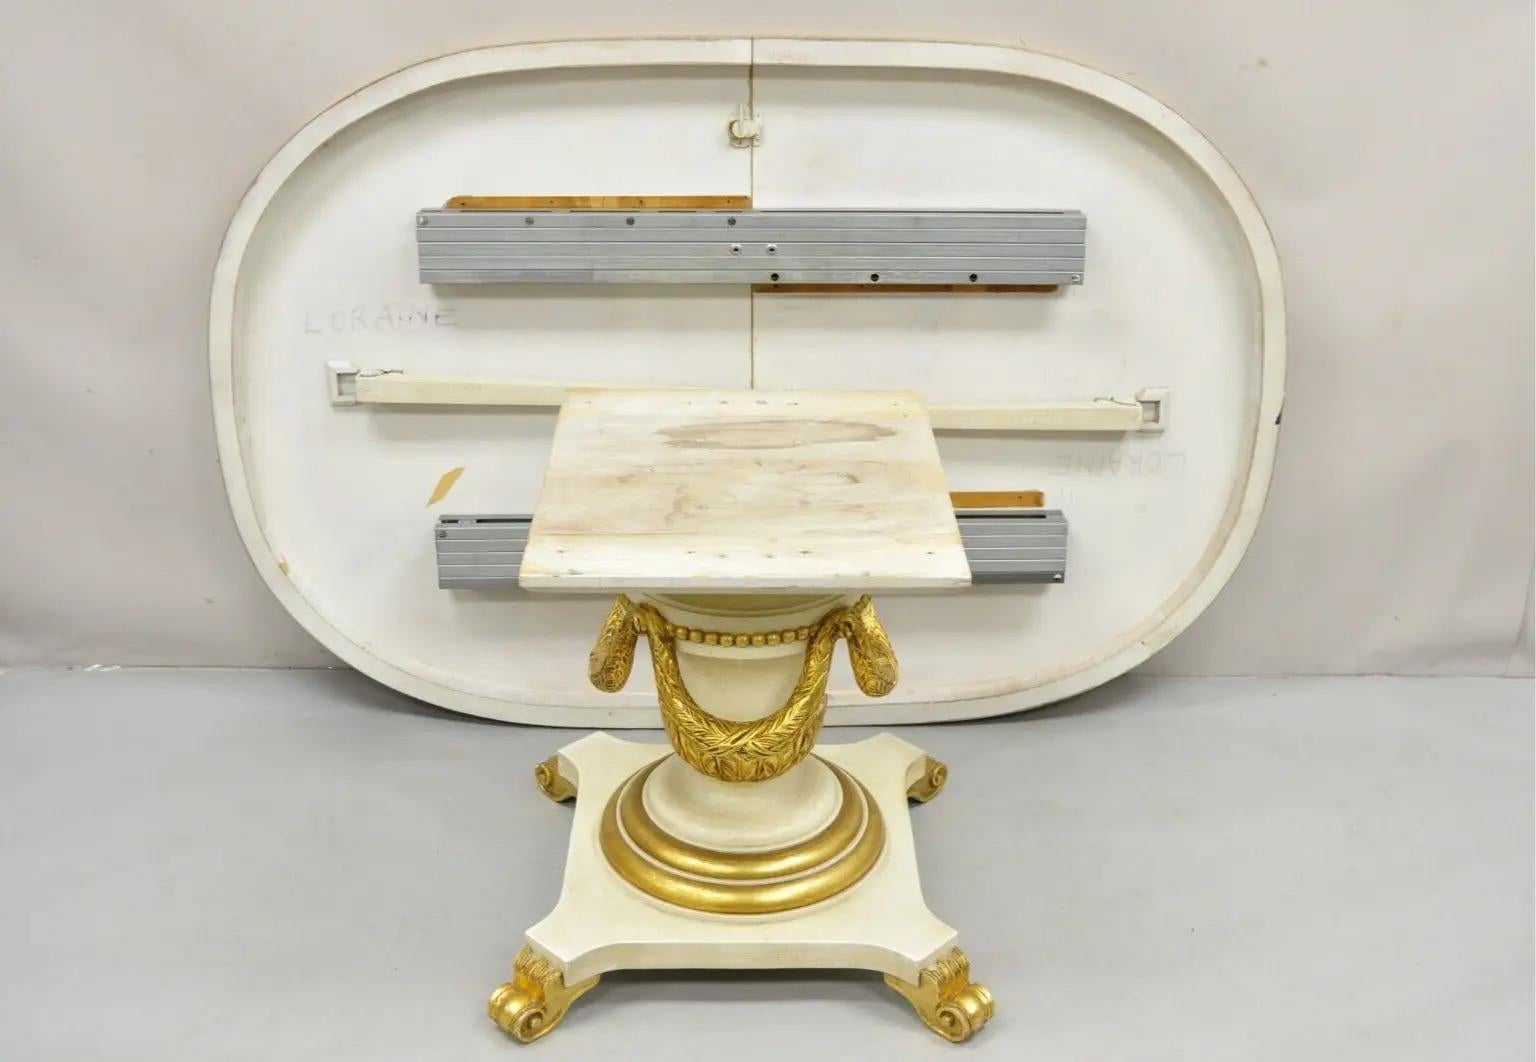 Italian Regency Cream & Gold Gilt Lacquered Urn Pedestal Dining Table - 3 Leaves For Sale 10